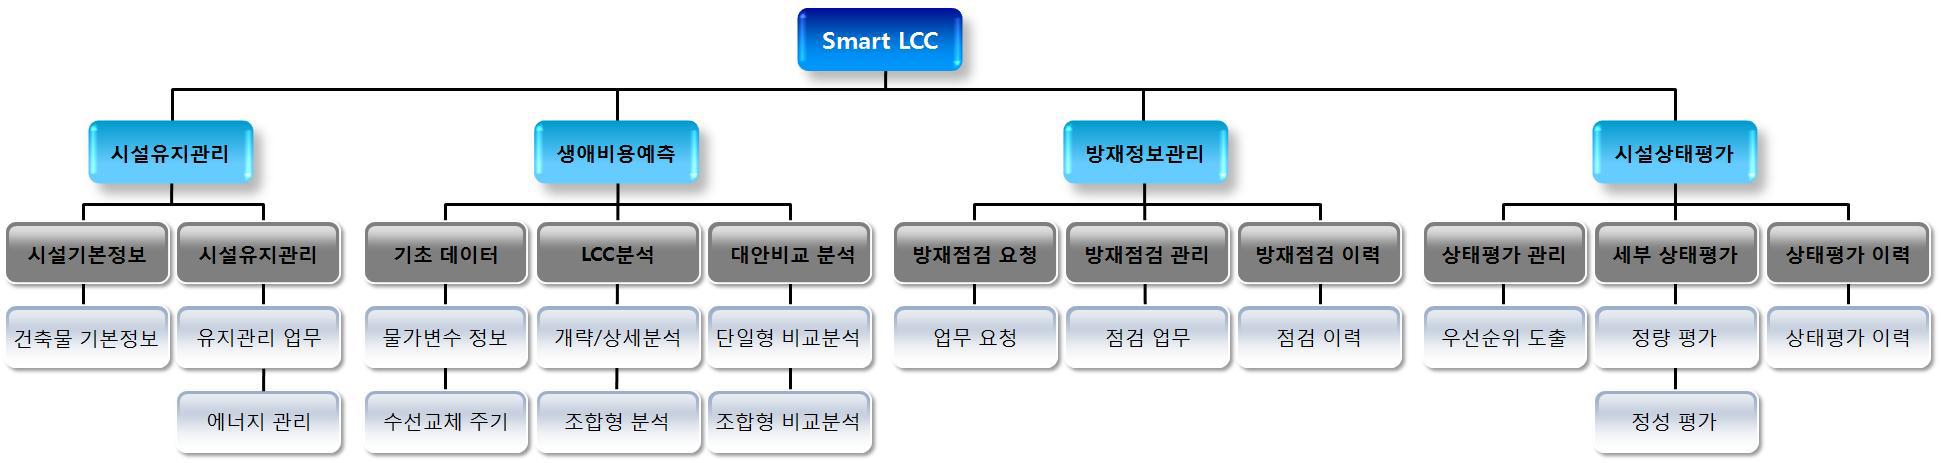 Smart LCC 어플리케이션 구성